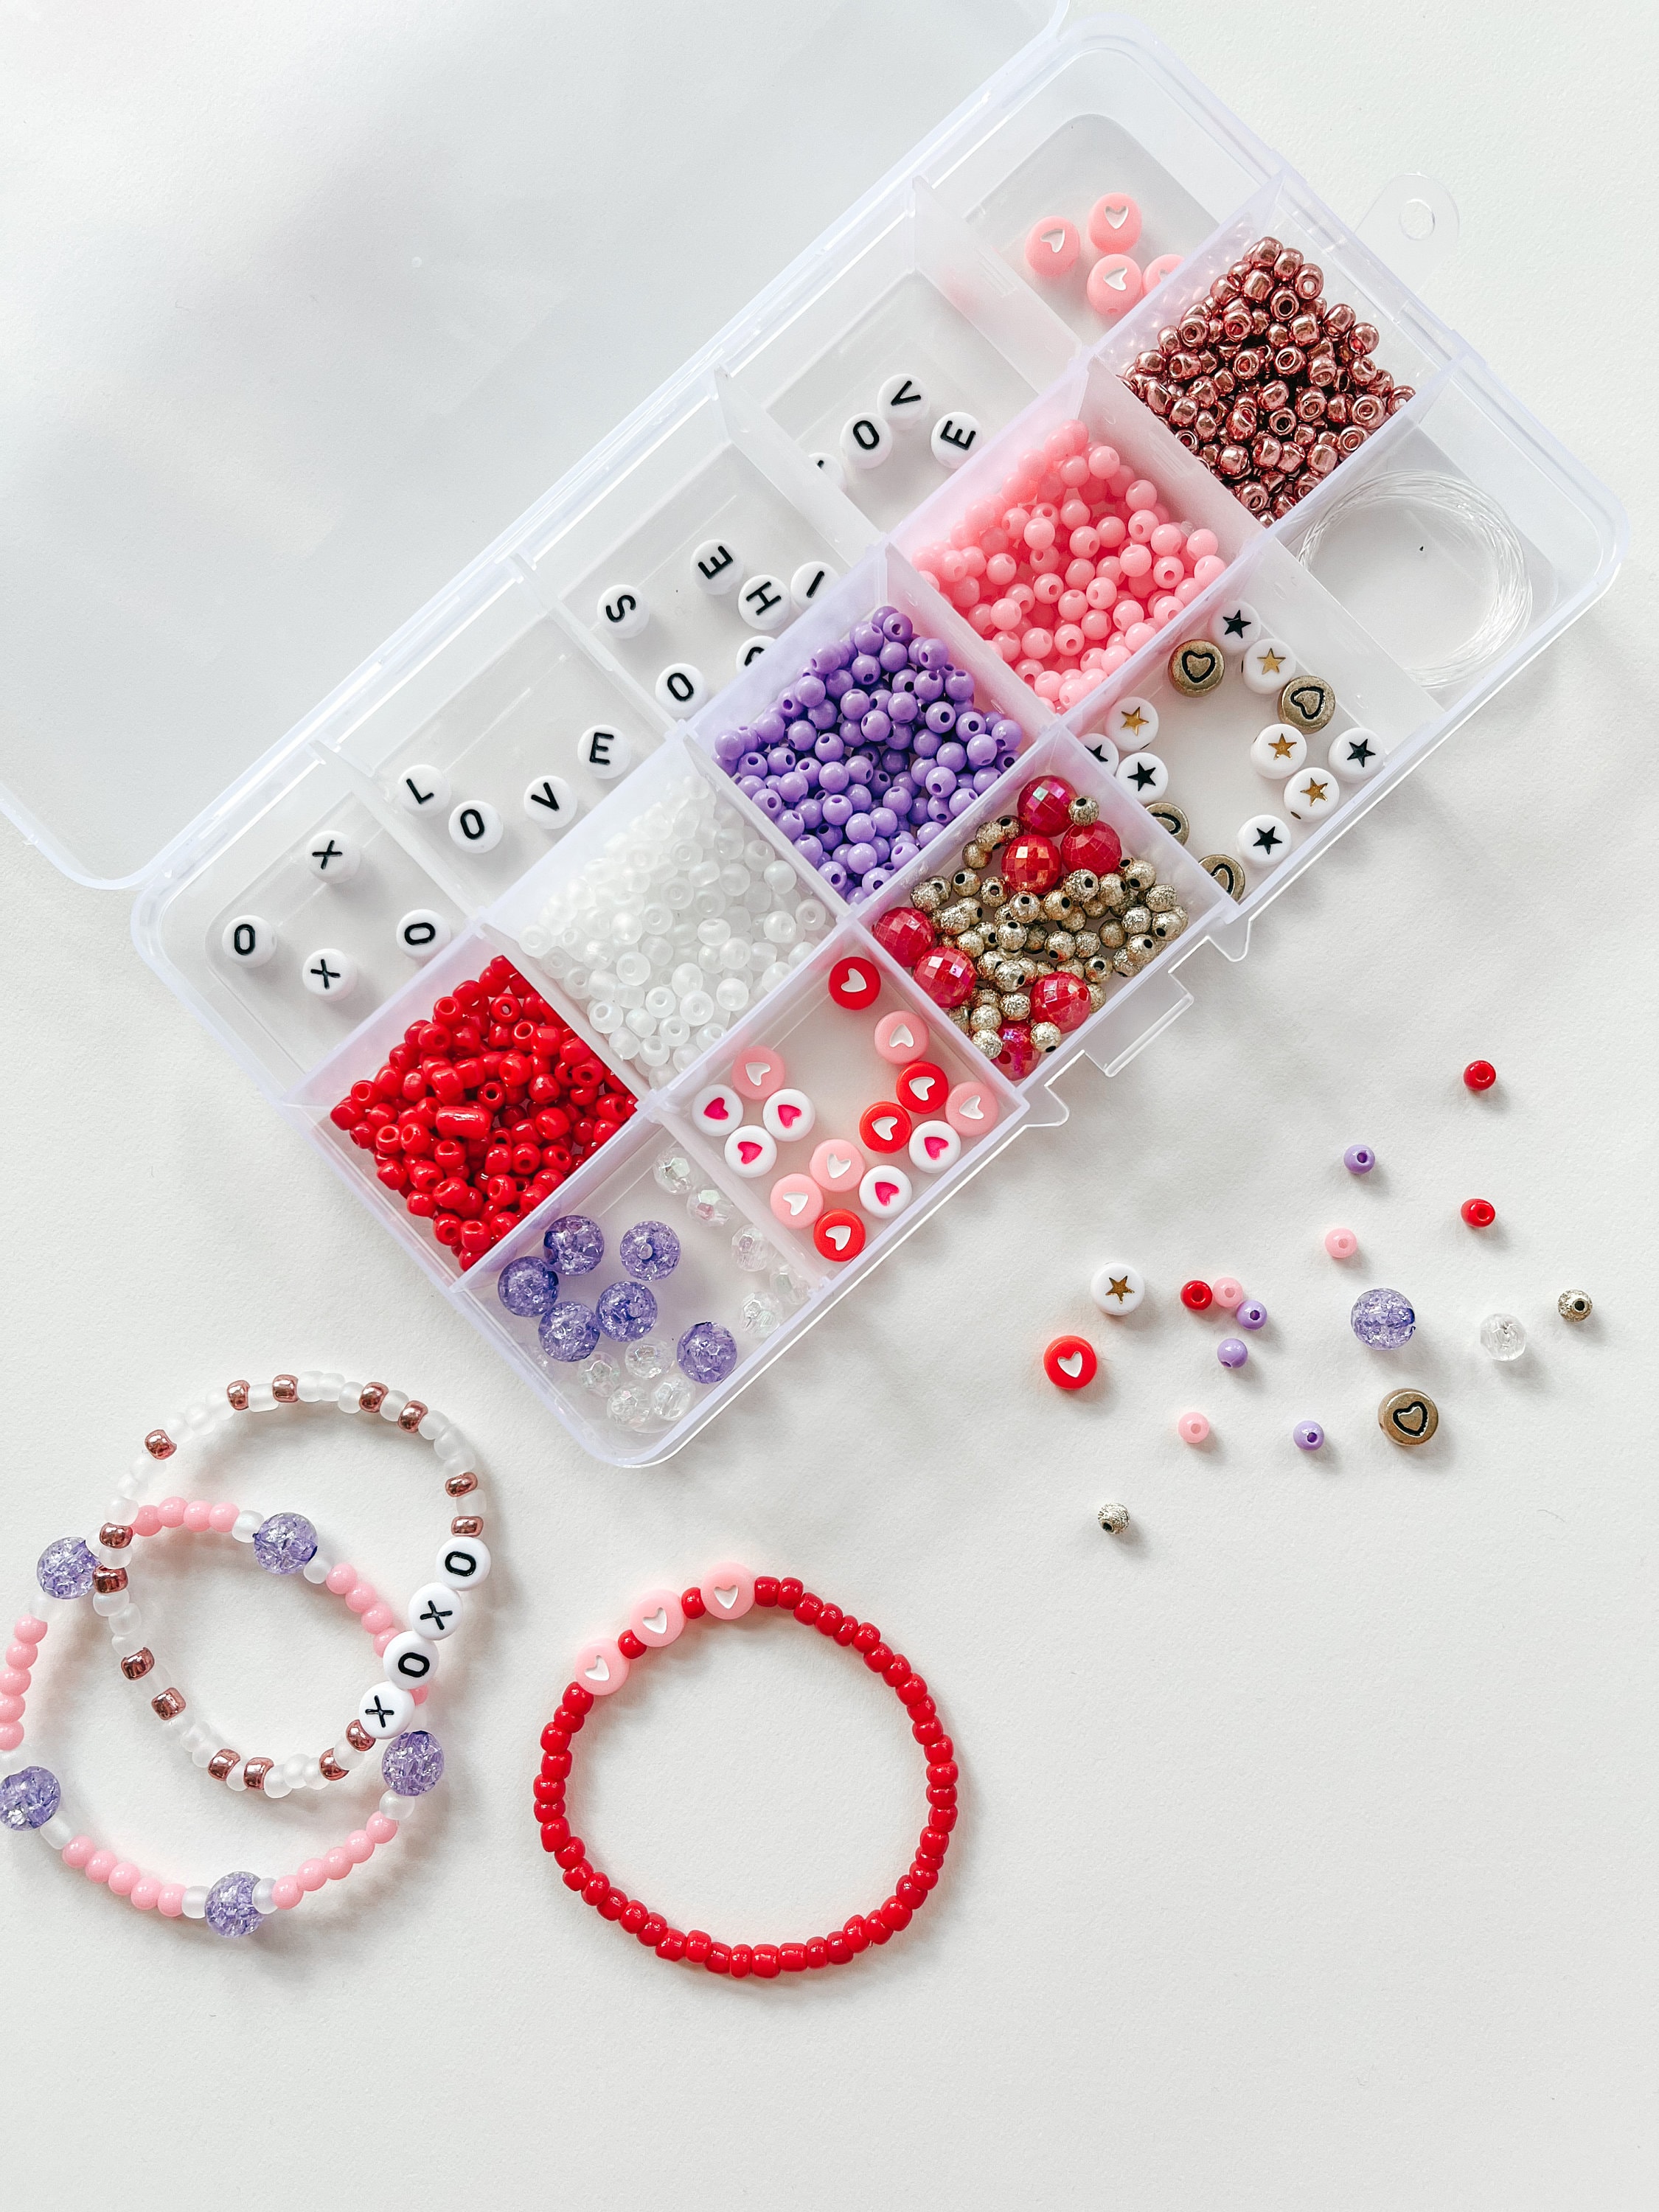 METAL Bracelet Making Kit for Adults, Sliders Connectors, Adult Diy Craft  Kit, Make, Wear or Repurpose, Gift Idea, Flat Back Craft Jewelry 